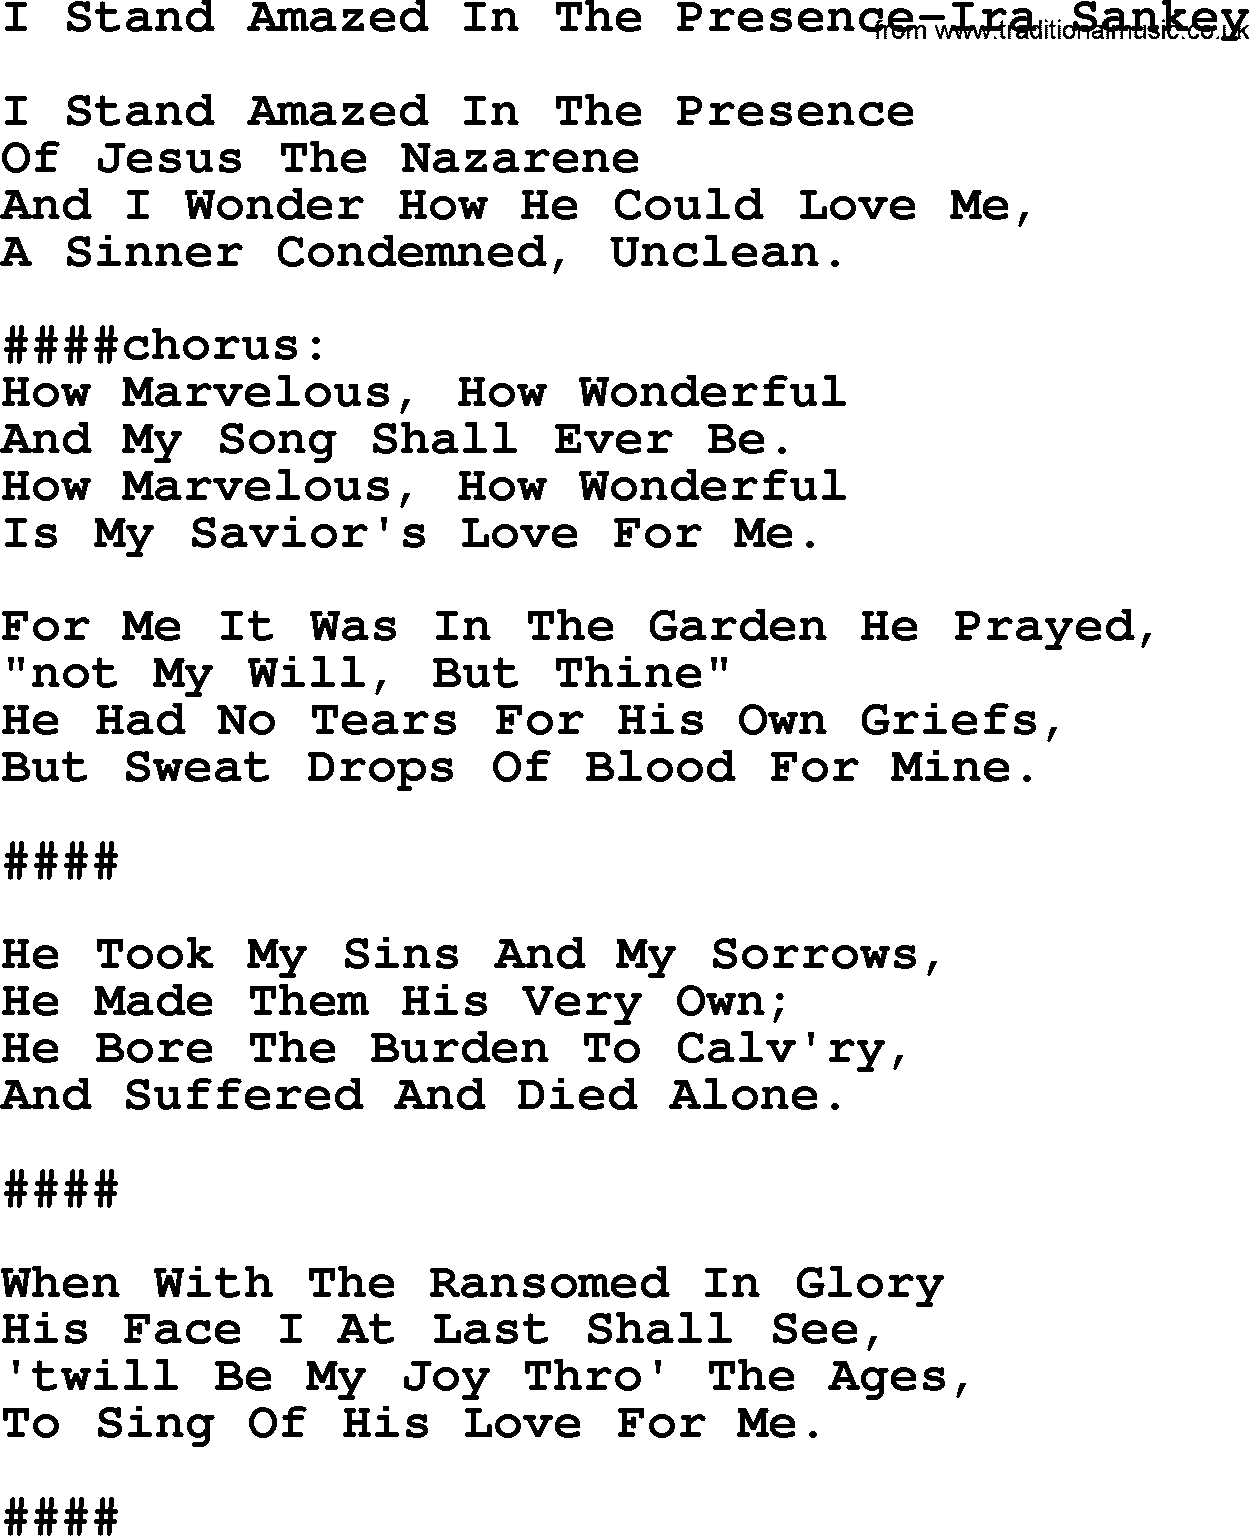 Ira Sankey hymn: I Stand Amazed In The Presence-Ira Sankey, lyrics